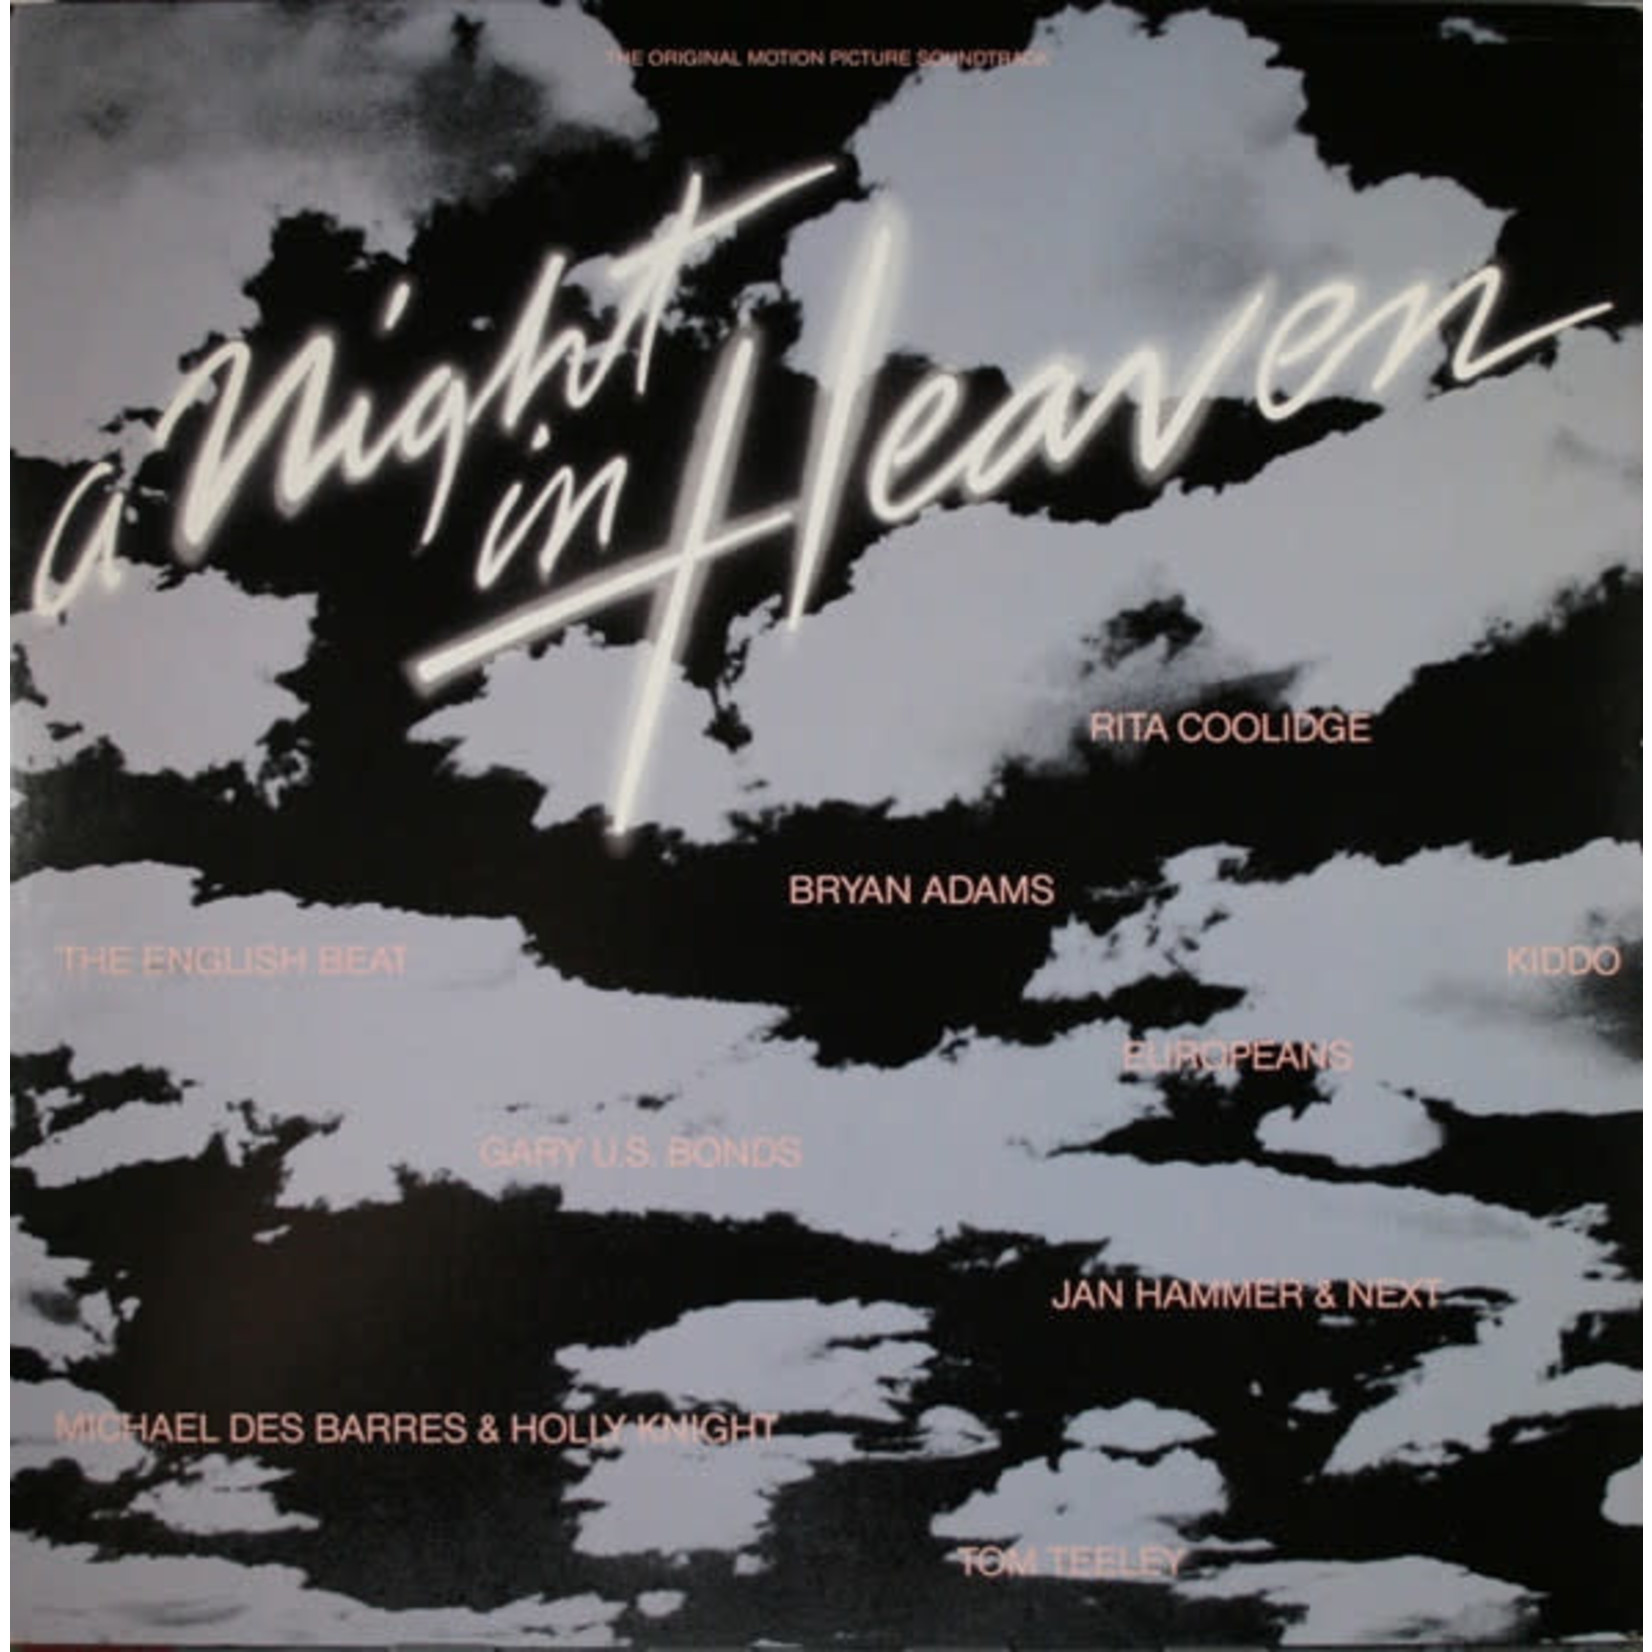 [Vintage] Various Artists - Night in Heaven (Original Soundtrack)